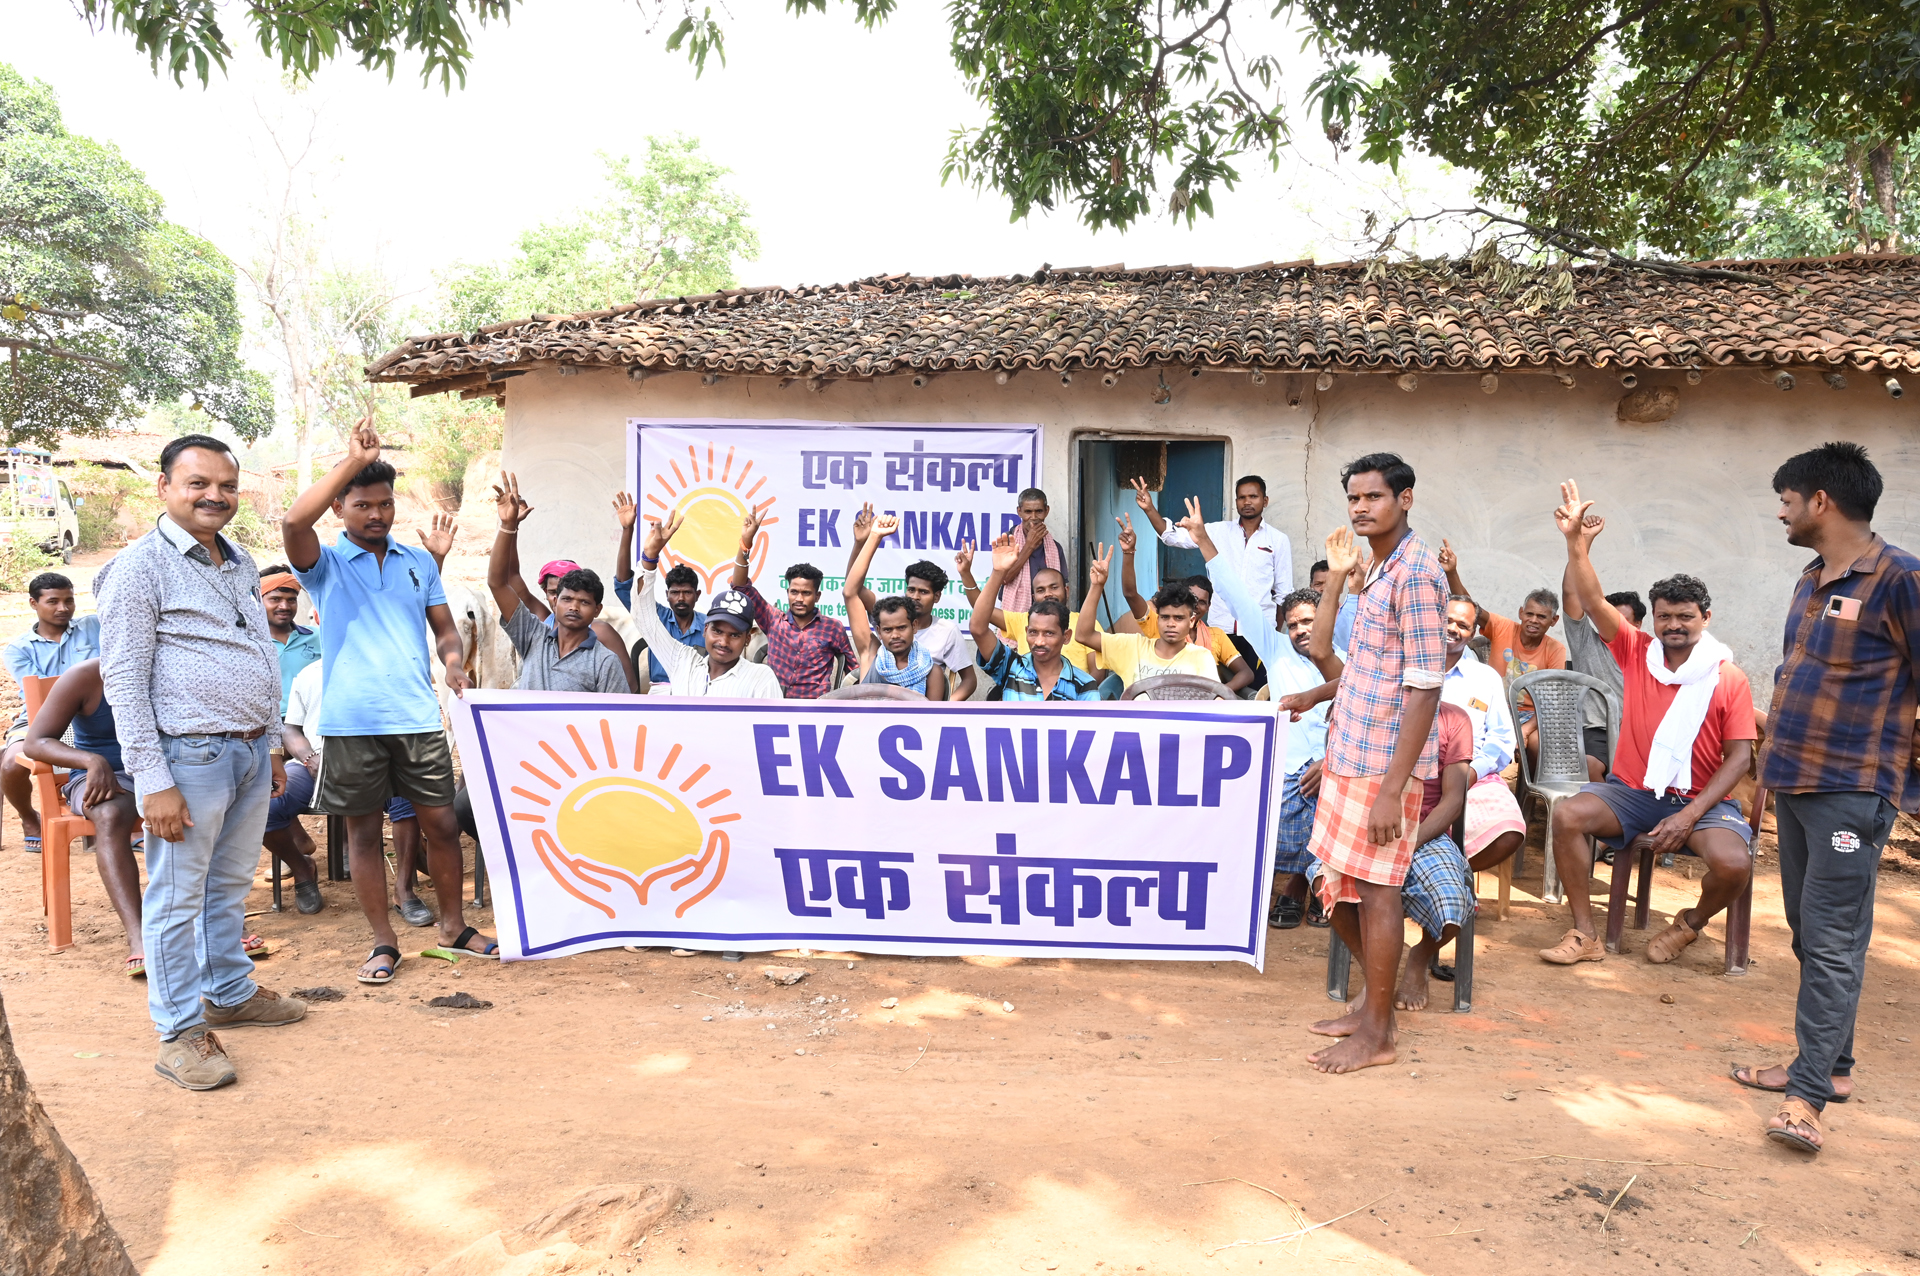 Ek Sankalp in Sehore - Madhya Pradesh